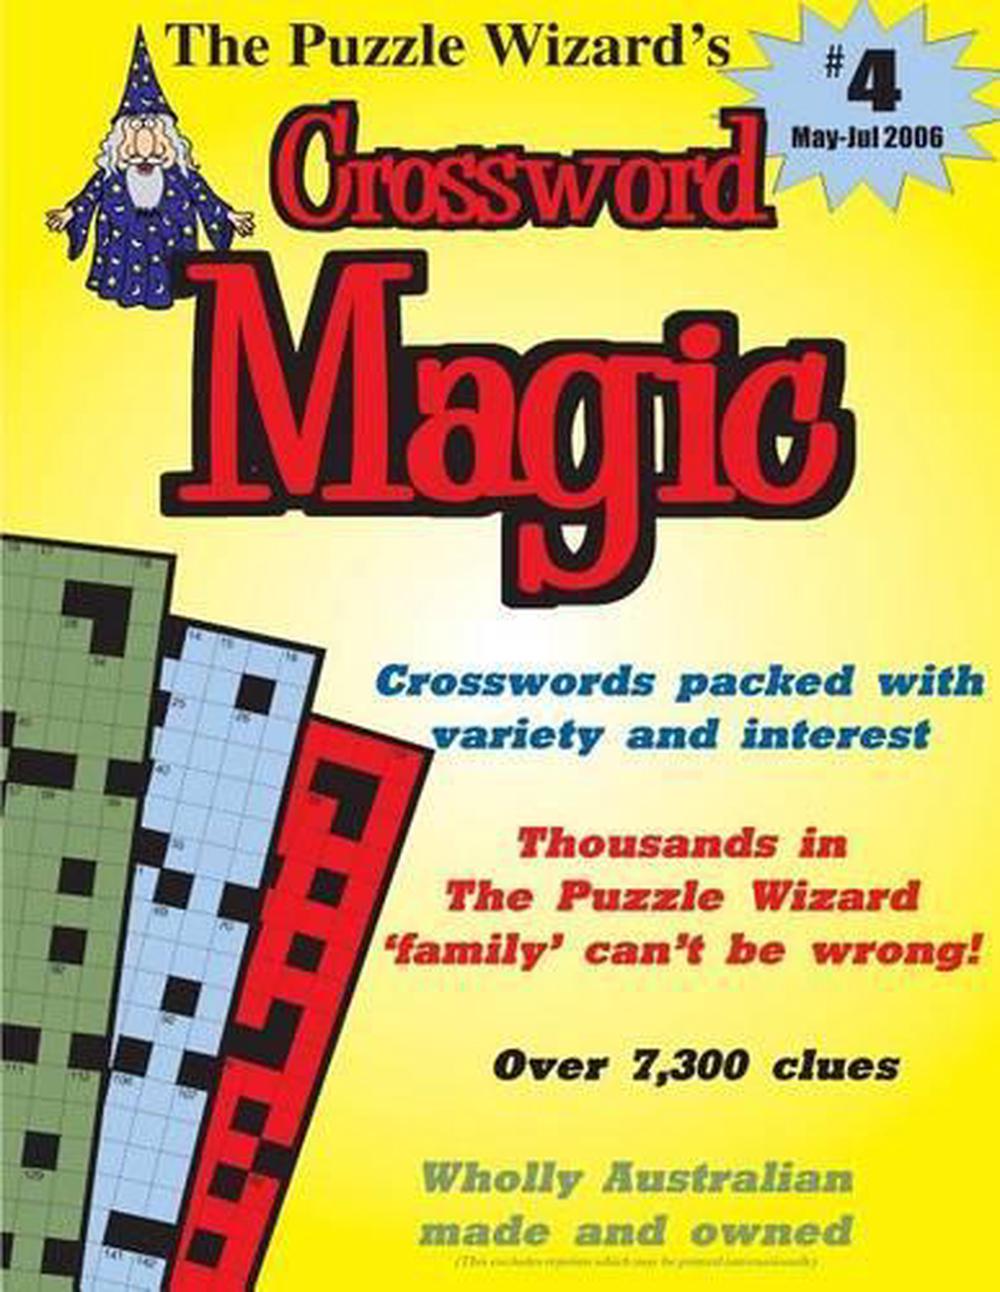 crossword wizard v3.4.2rush software